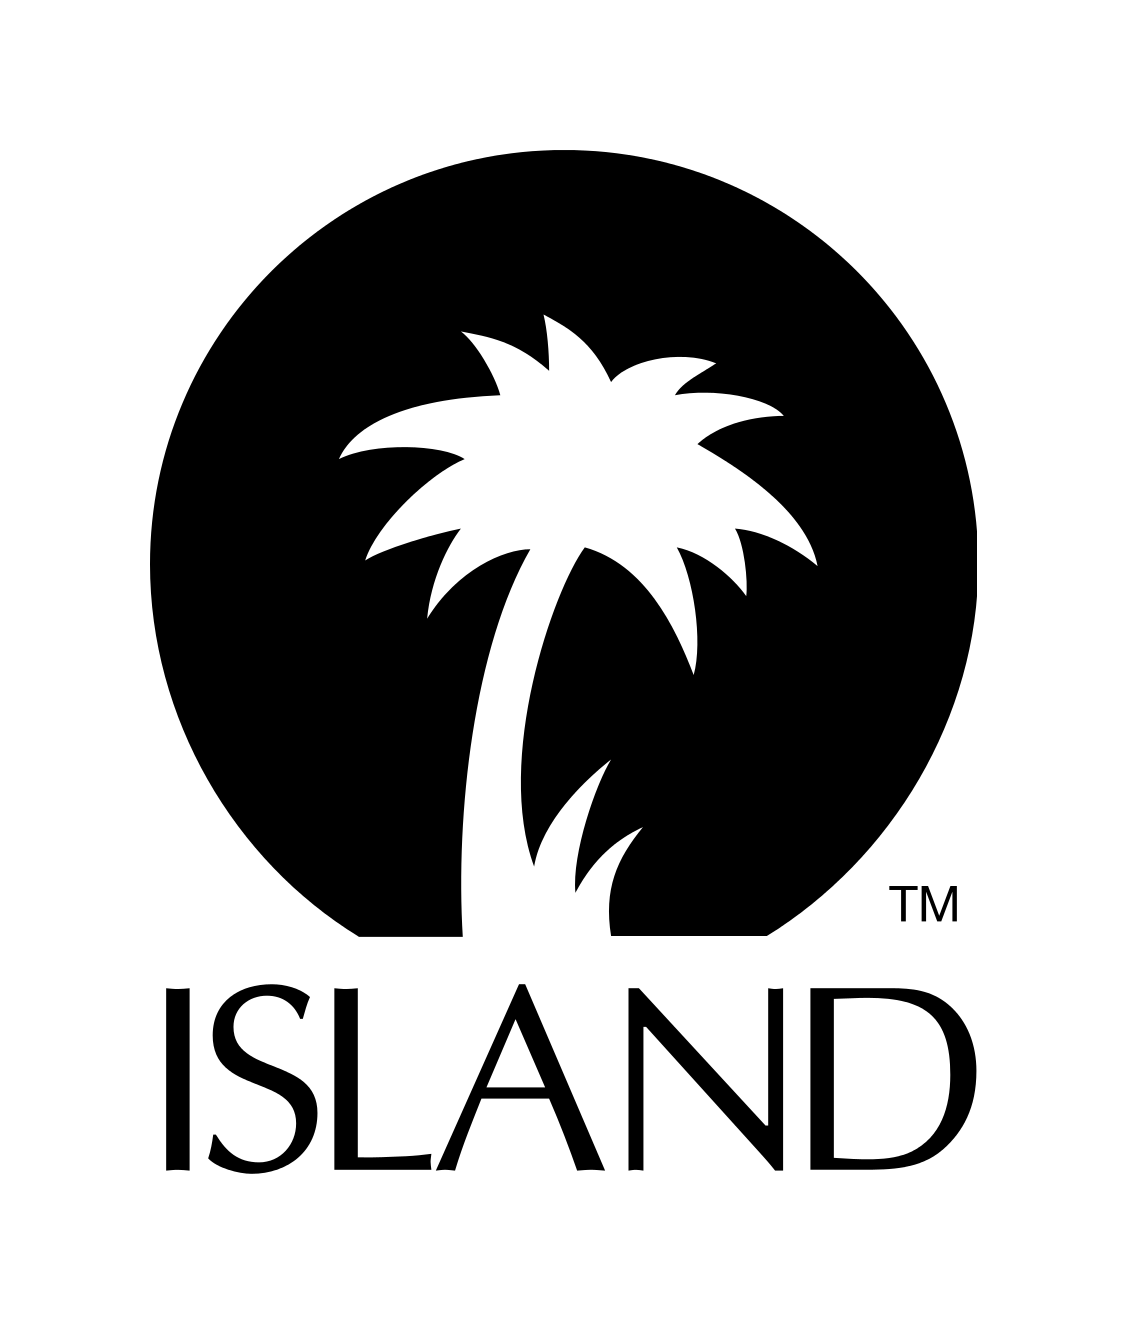 Record Company Logo - Pin by Brian Larney on Label logo | Logos, Record label logo ...